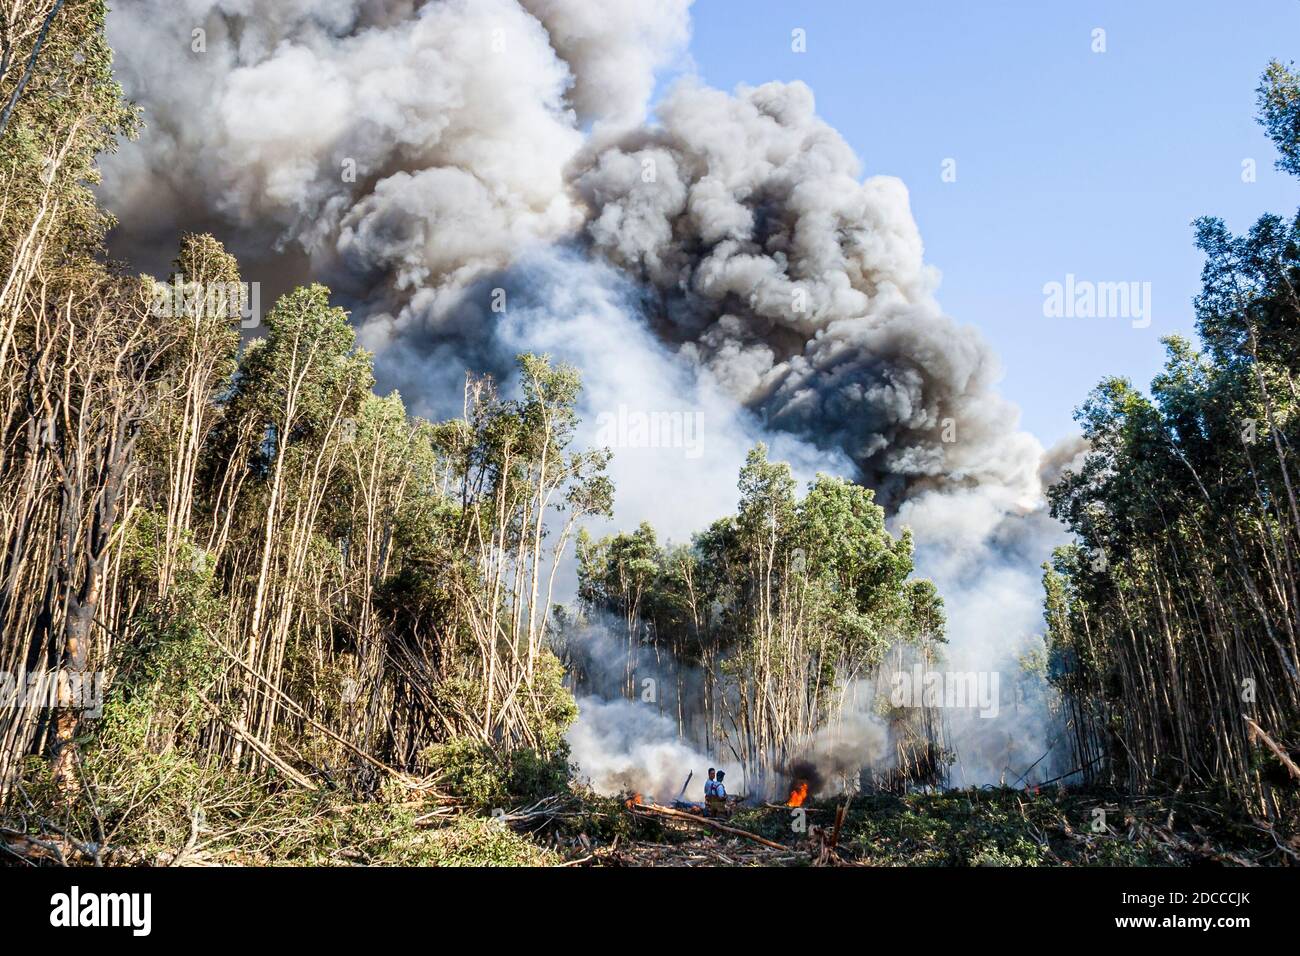 Miami Florida, Pennsuco West Okeechobee Road, Feuer beschädigt Bäume Asche kontrollierten Verbrennung, Feuerwehrmänner Feuerwehrmänner Feuerwehrmänner Everglades Rand Rauch, Stockfoto